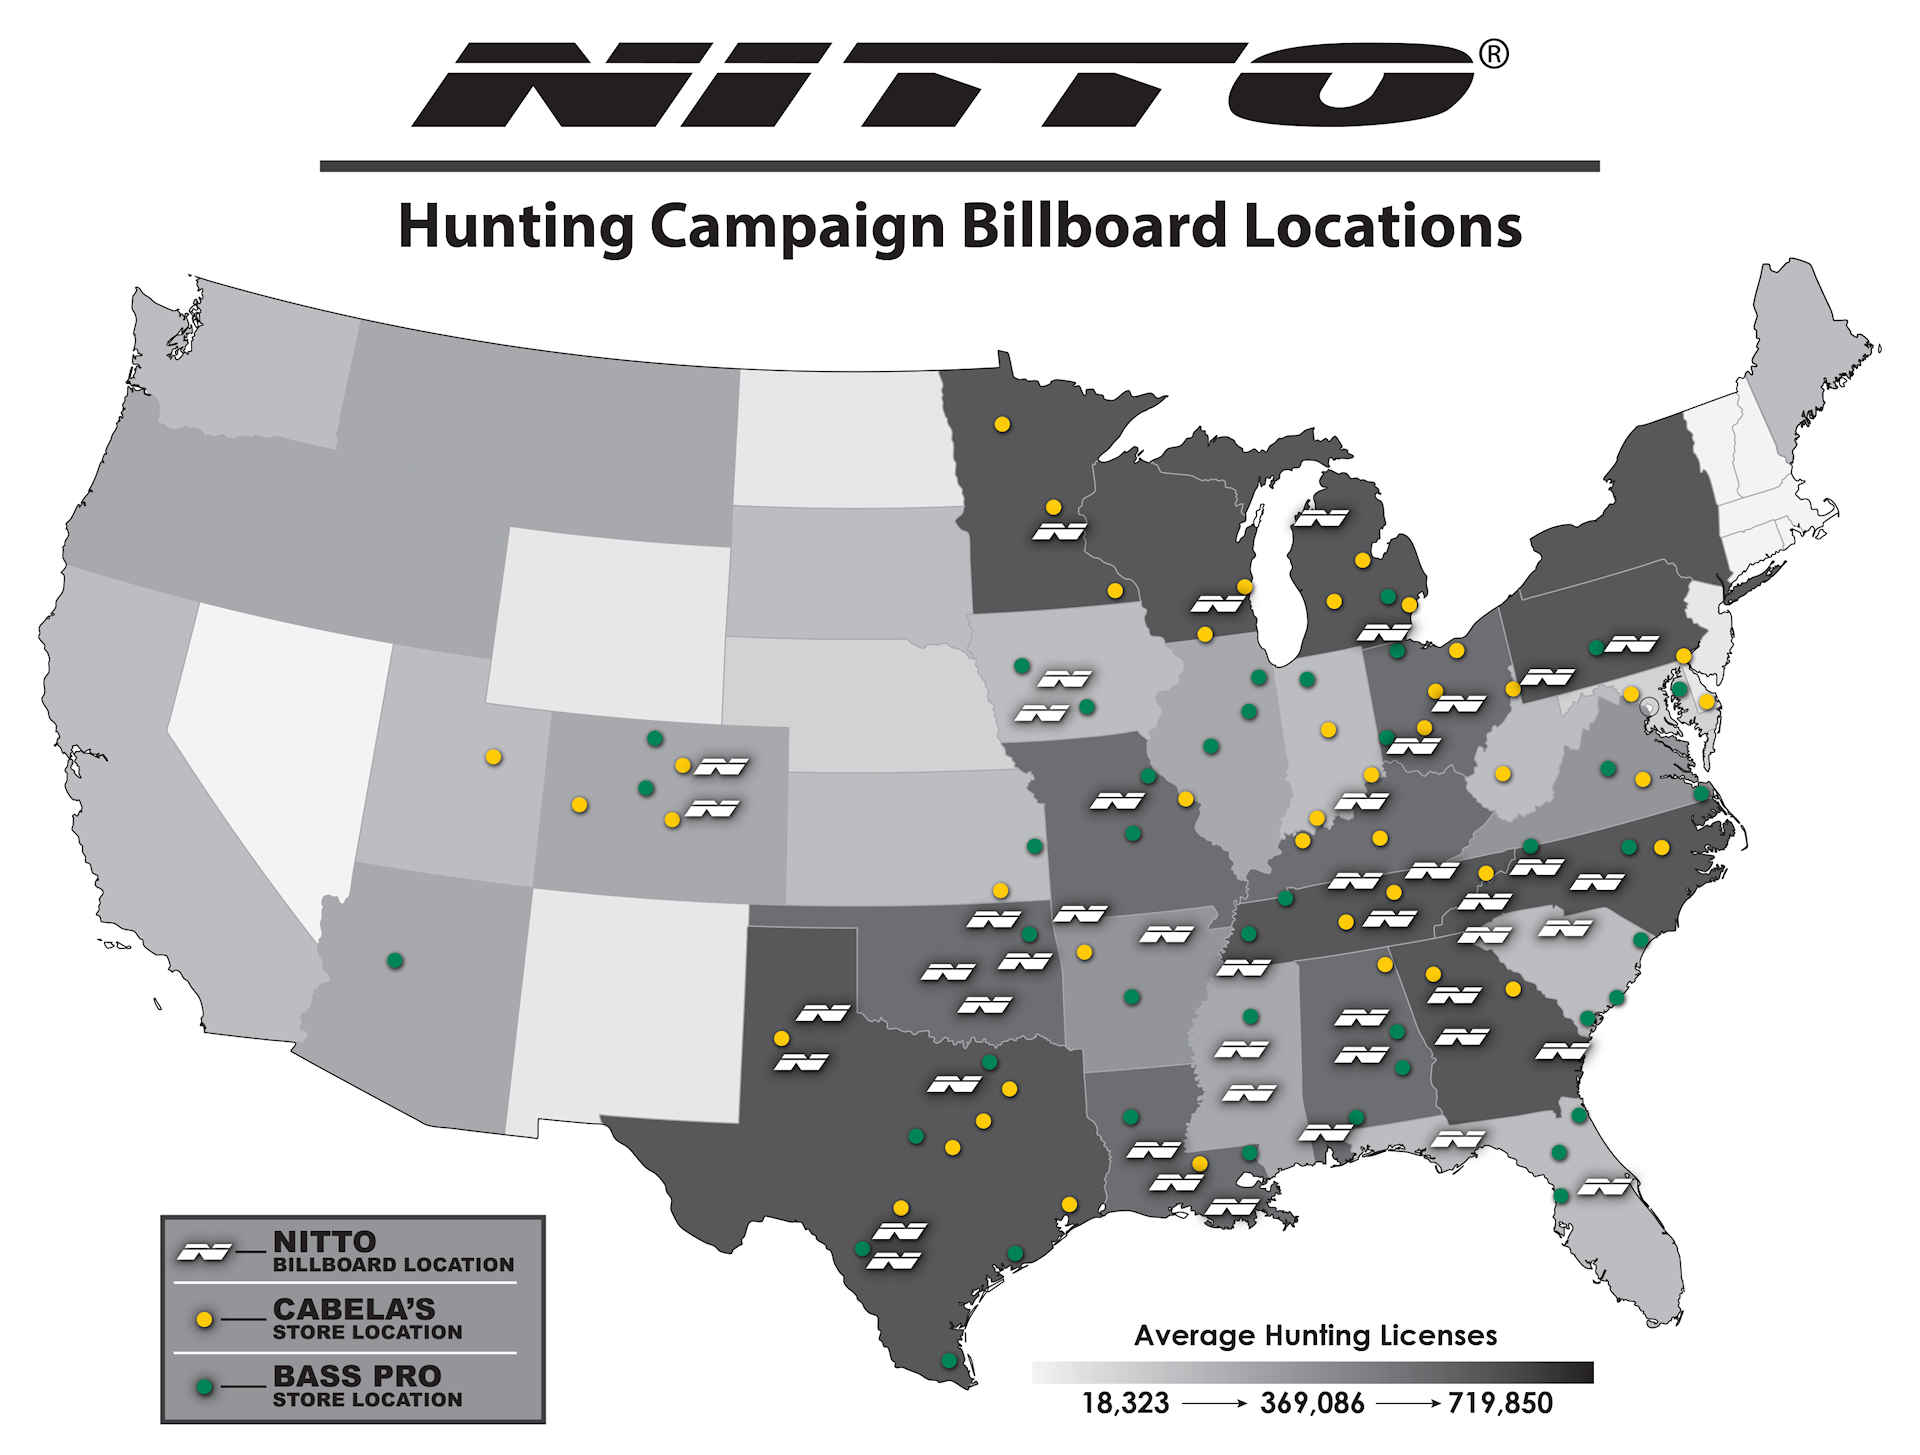 Nitto Billboard Distribution Map